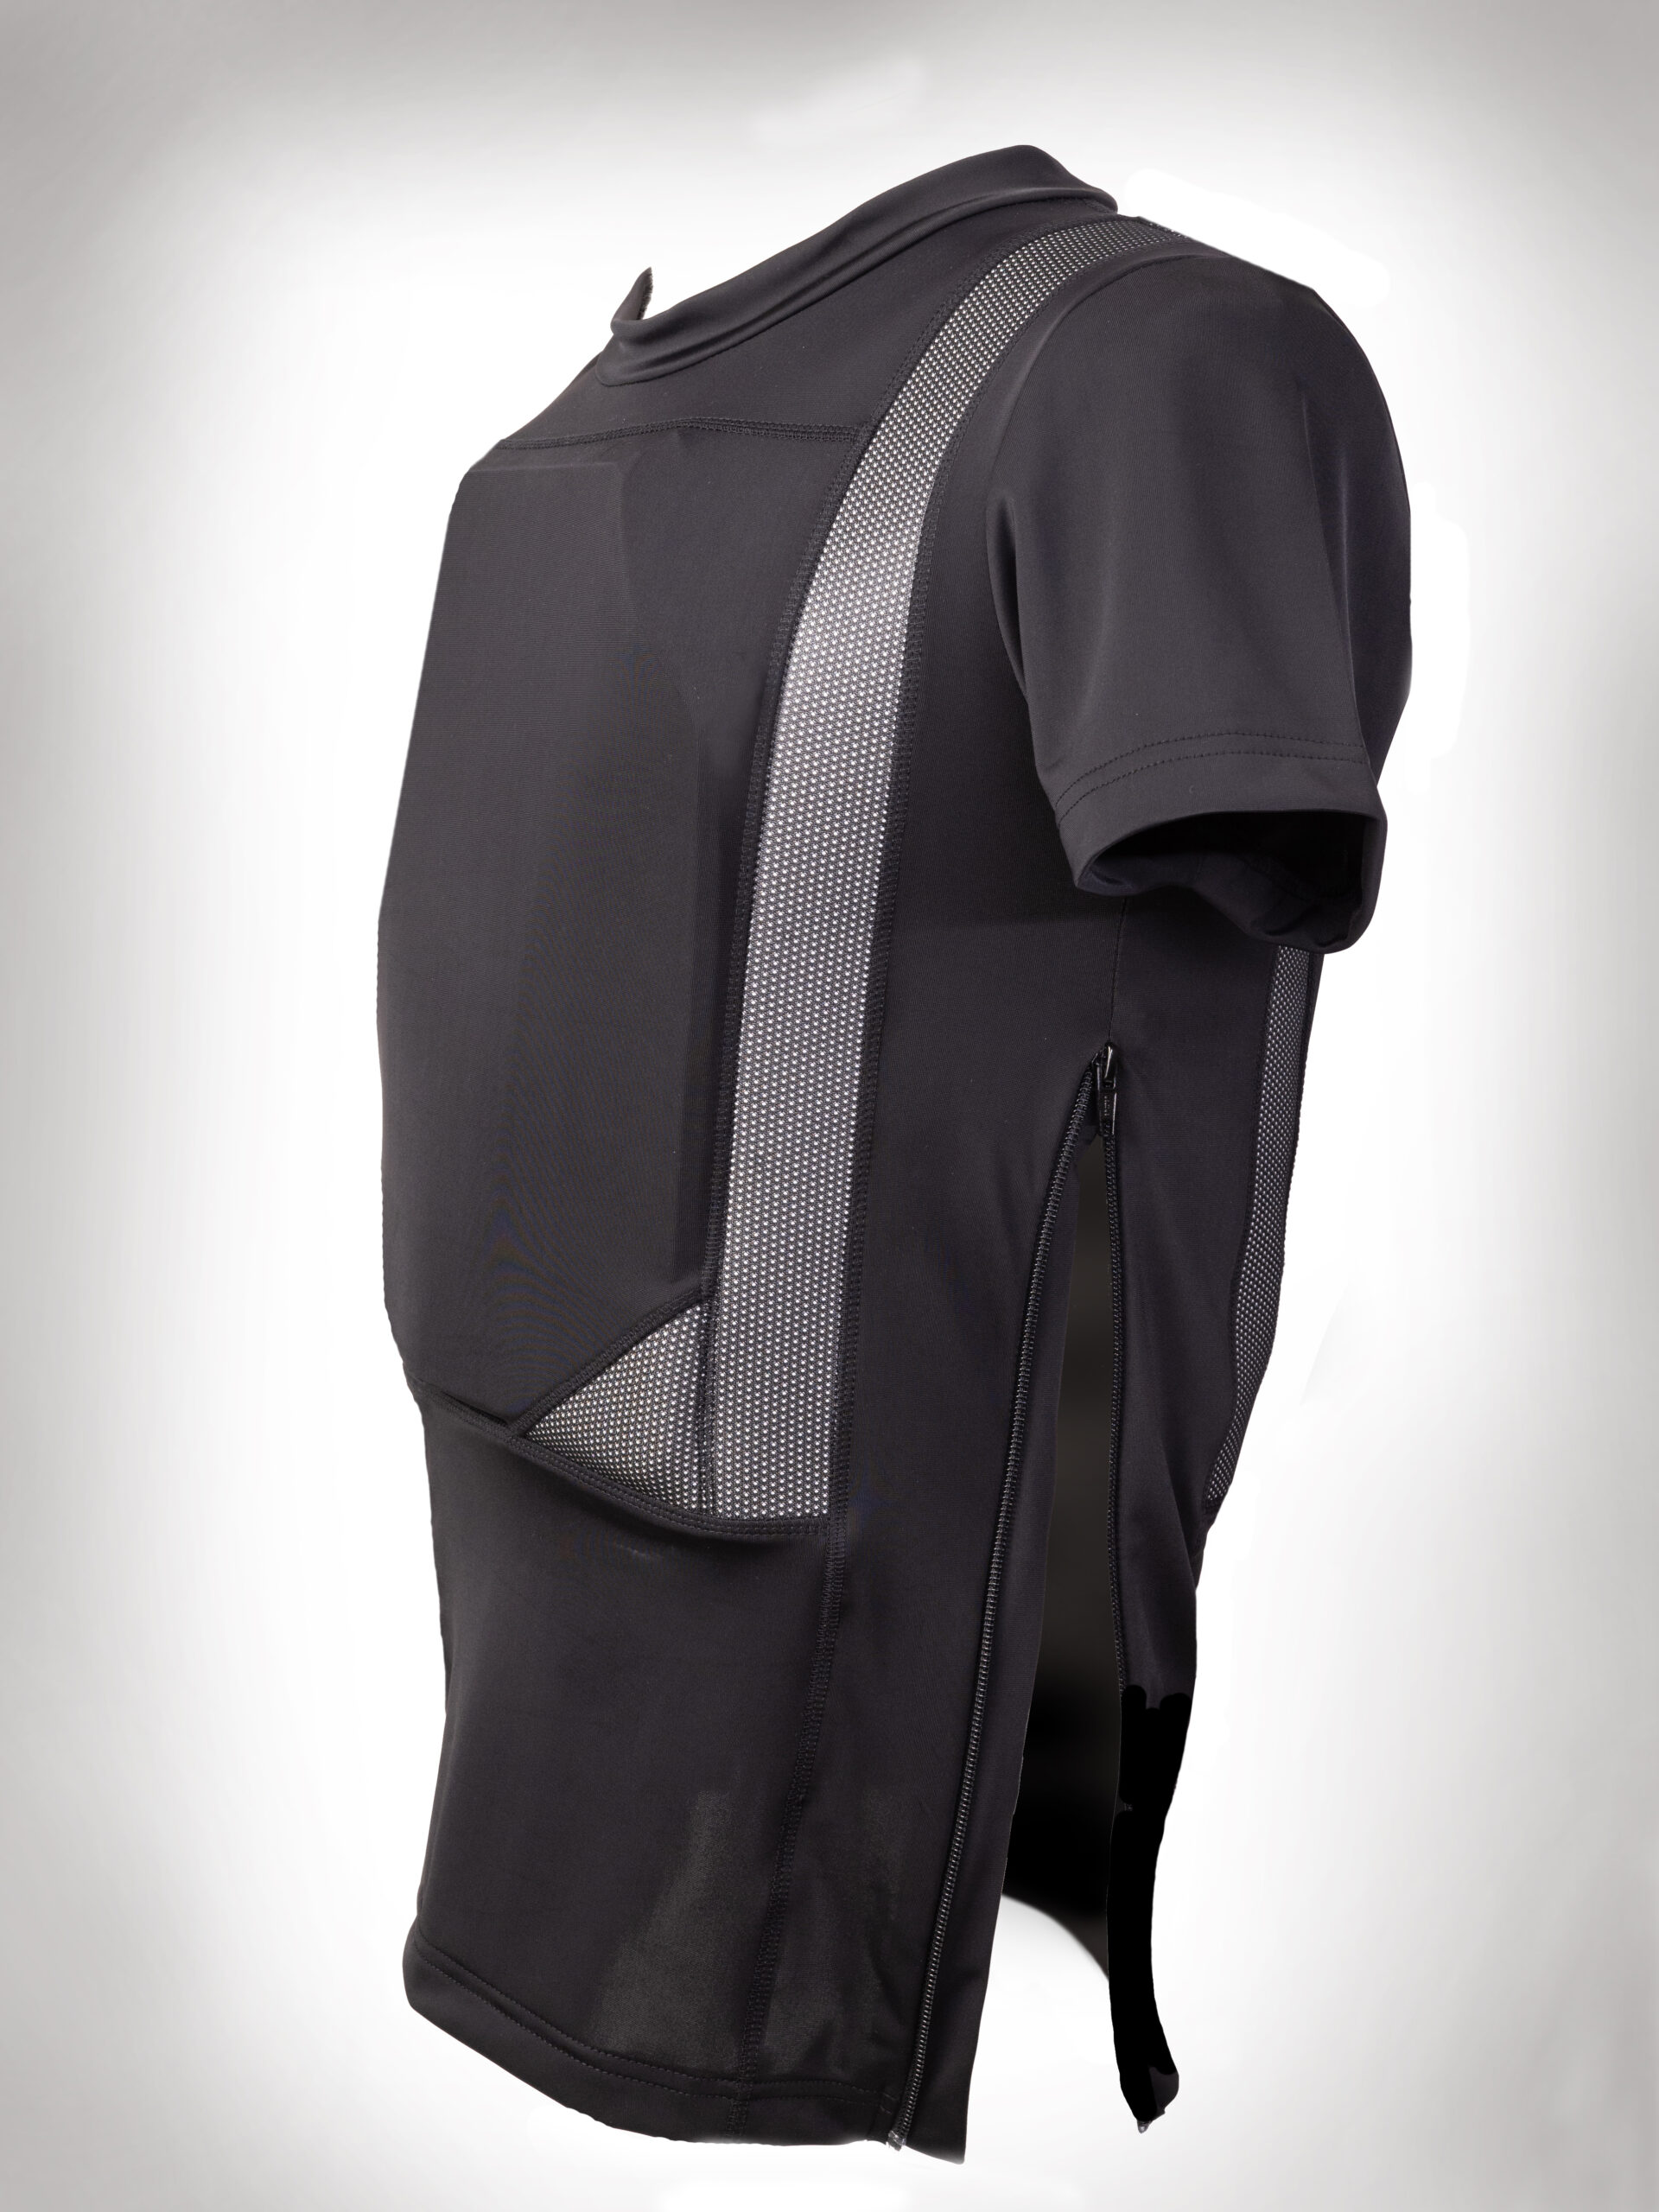 USGI Tier 1 Protective Undergarment with kevlar body armor inserts